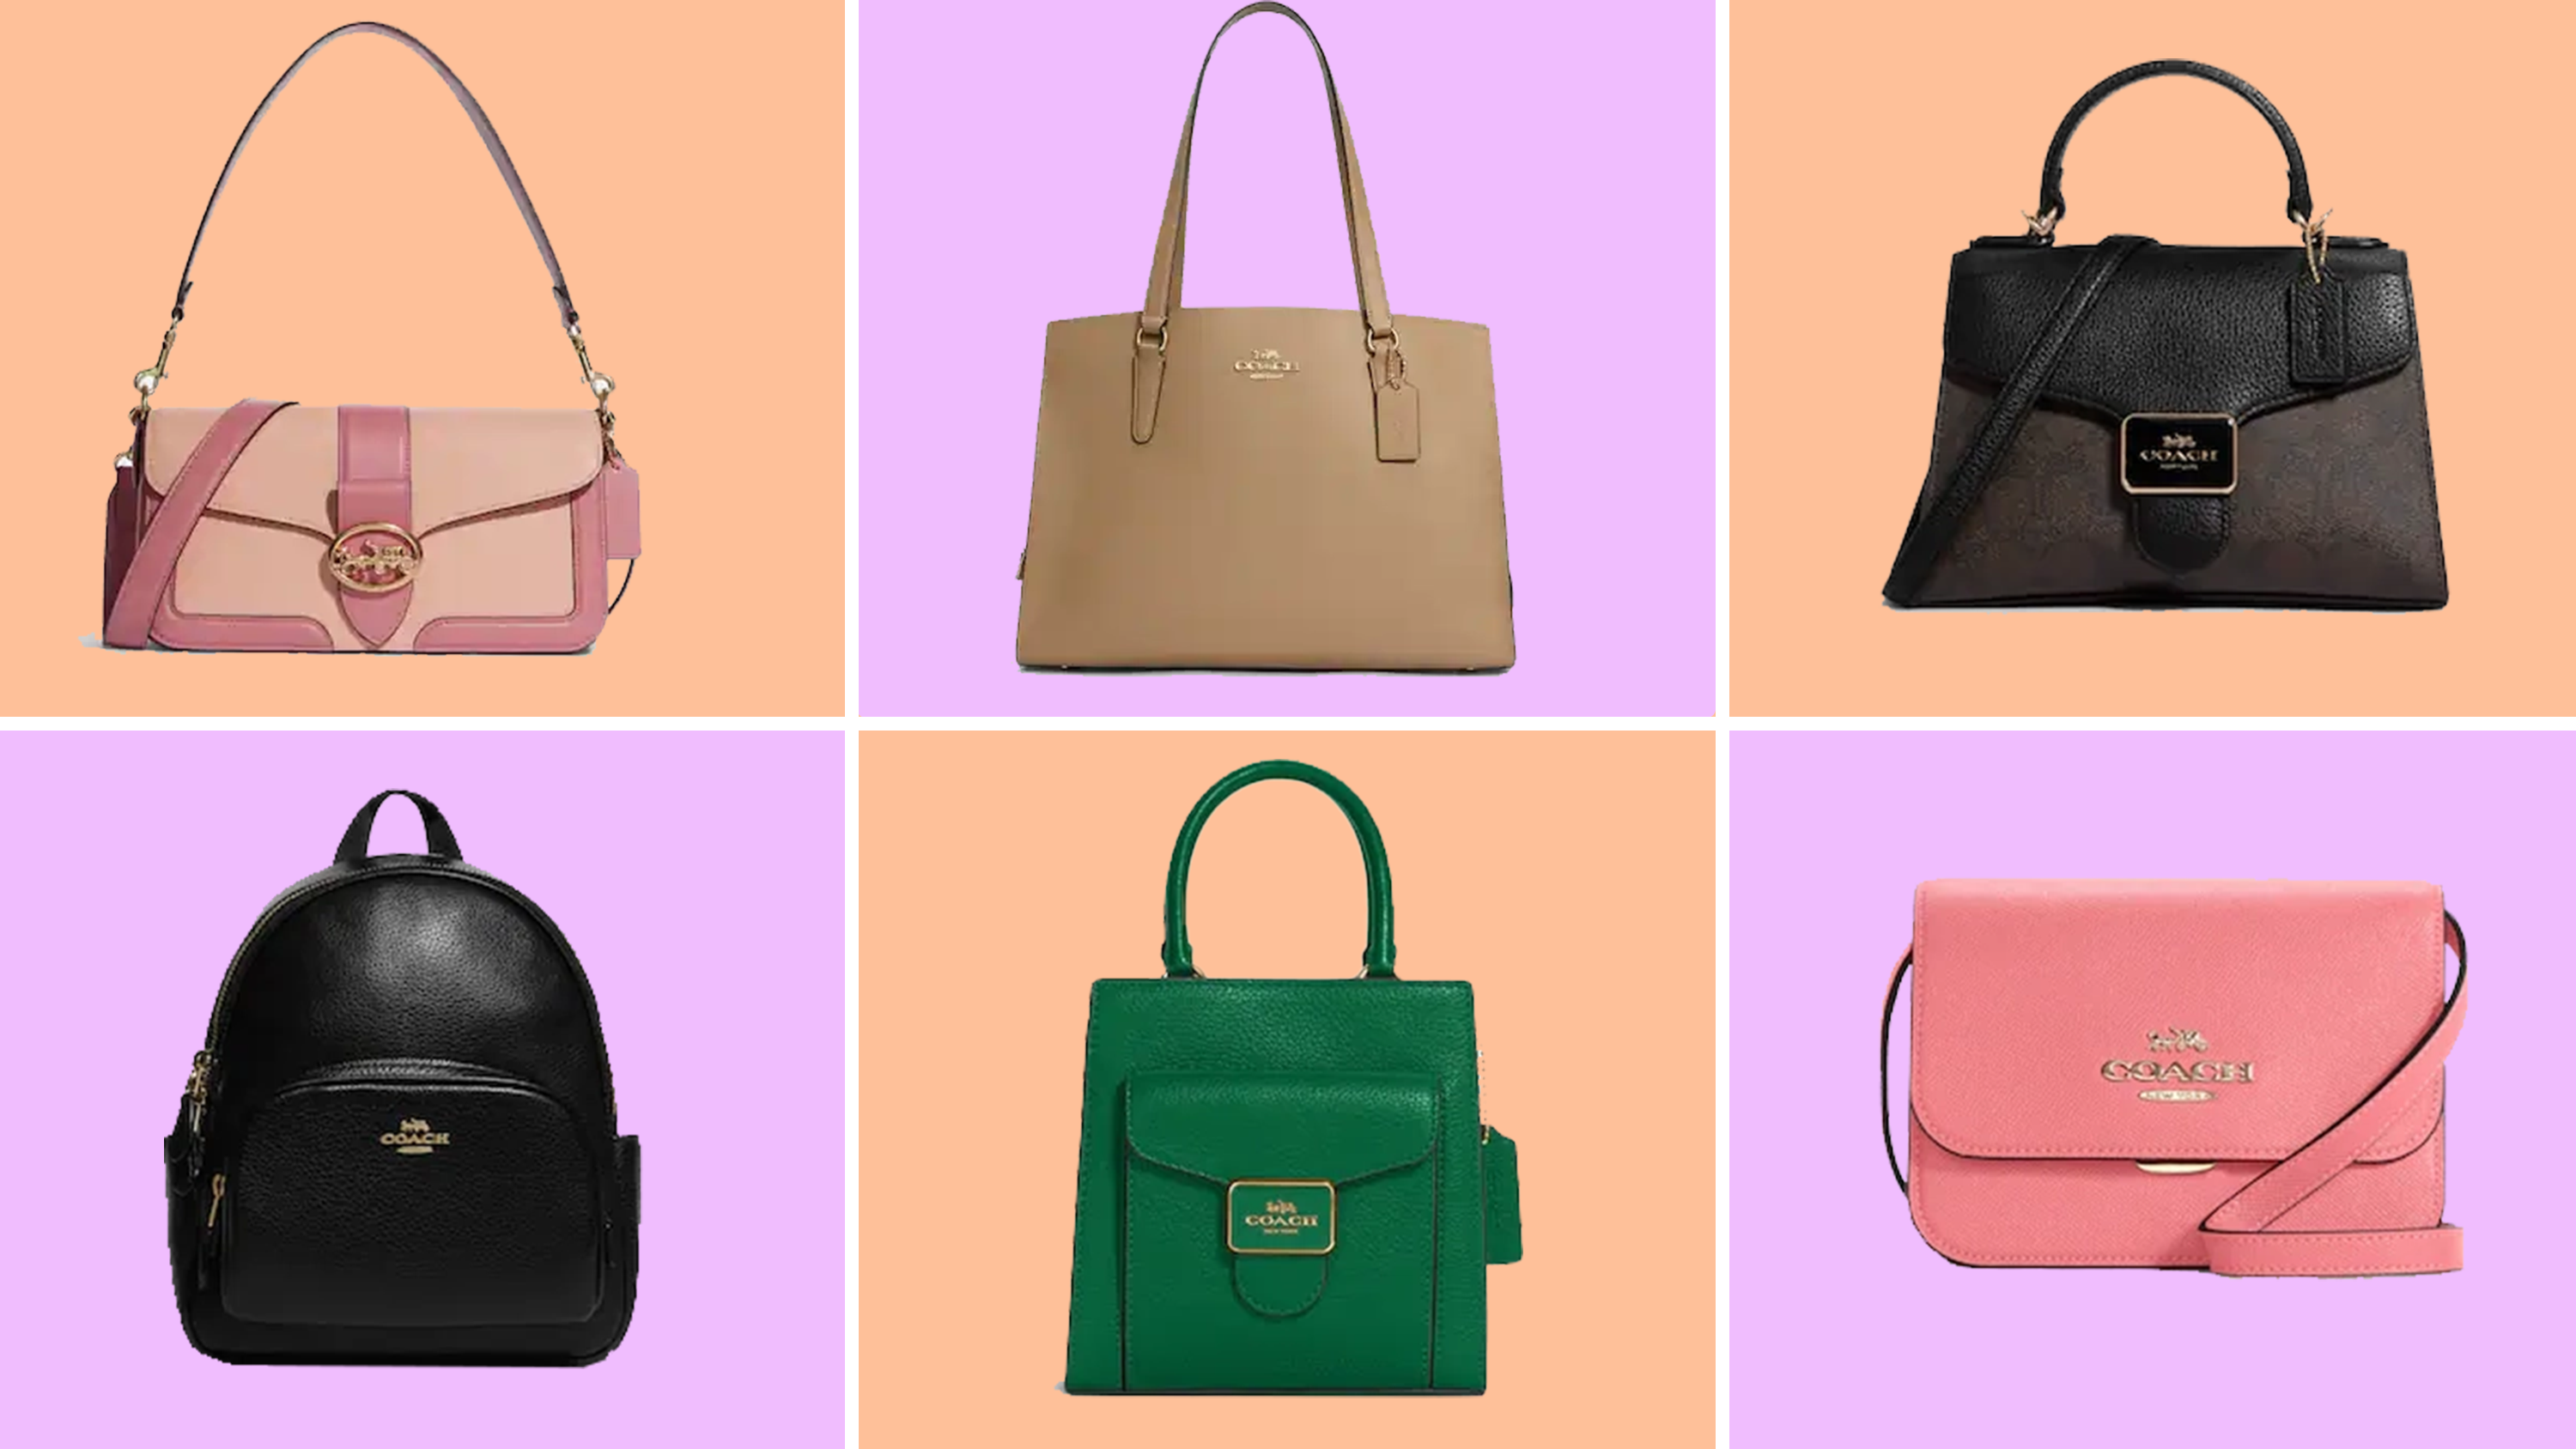 Coach Outlet deals: Shop the best Coach bags on sale right now